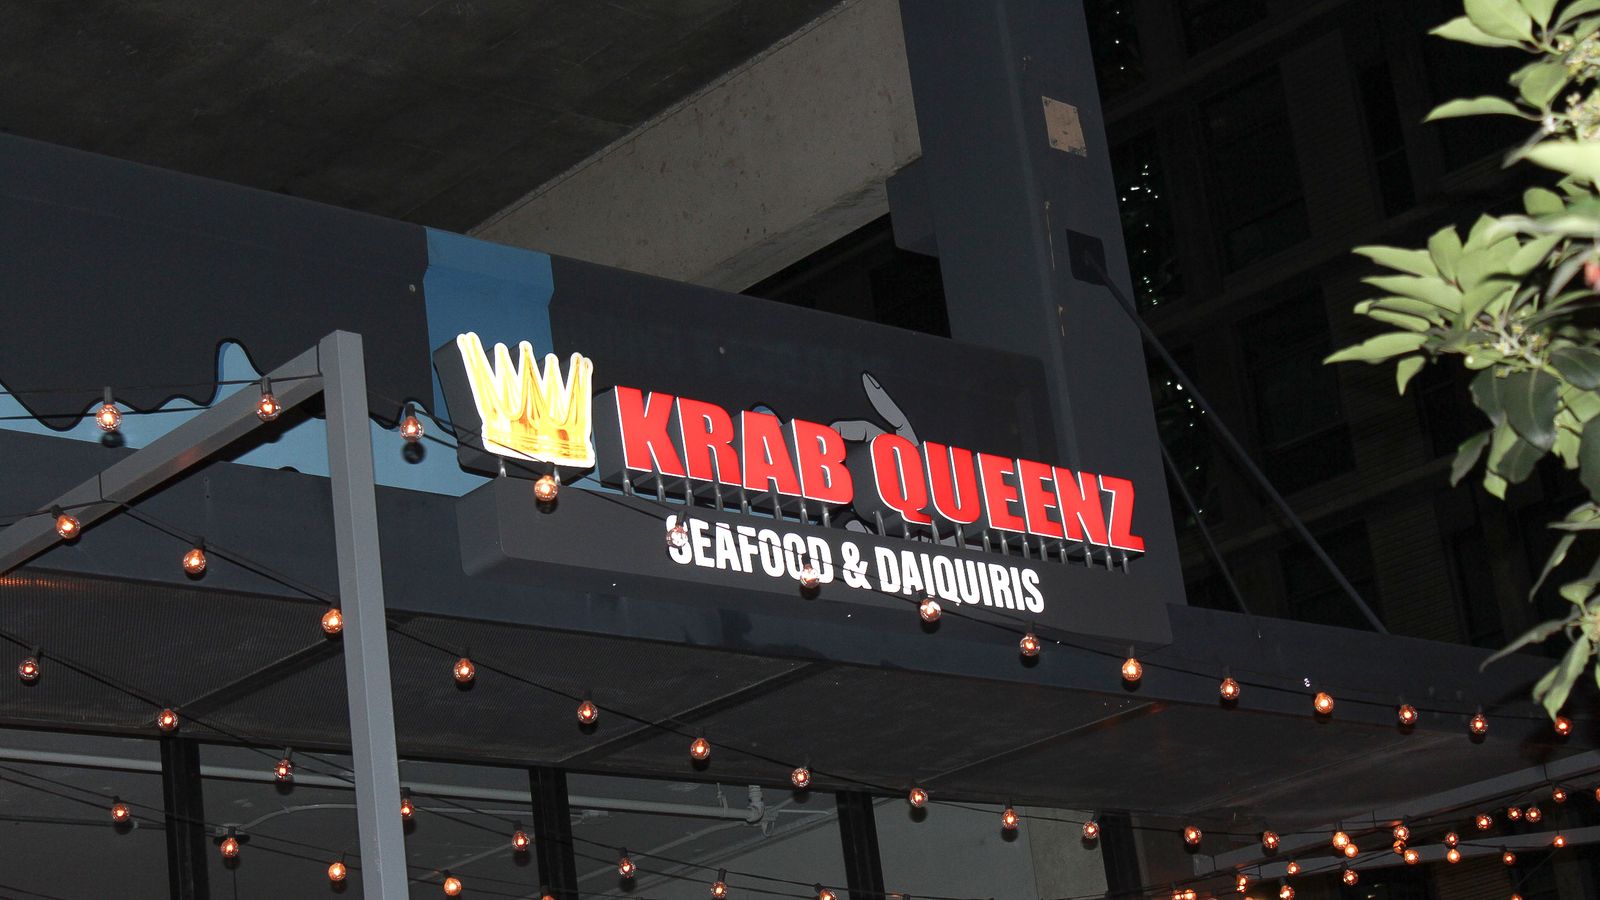 krab queenz light up dimensional letters